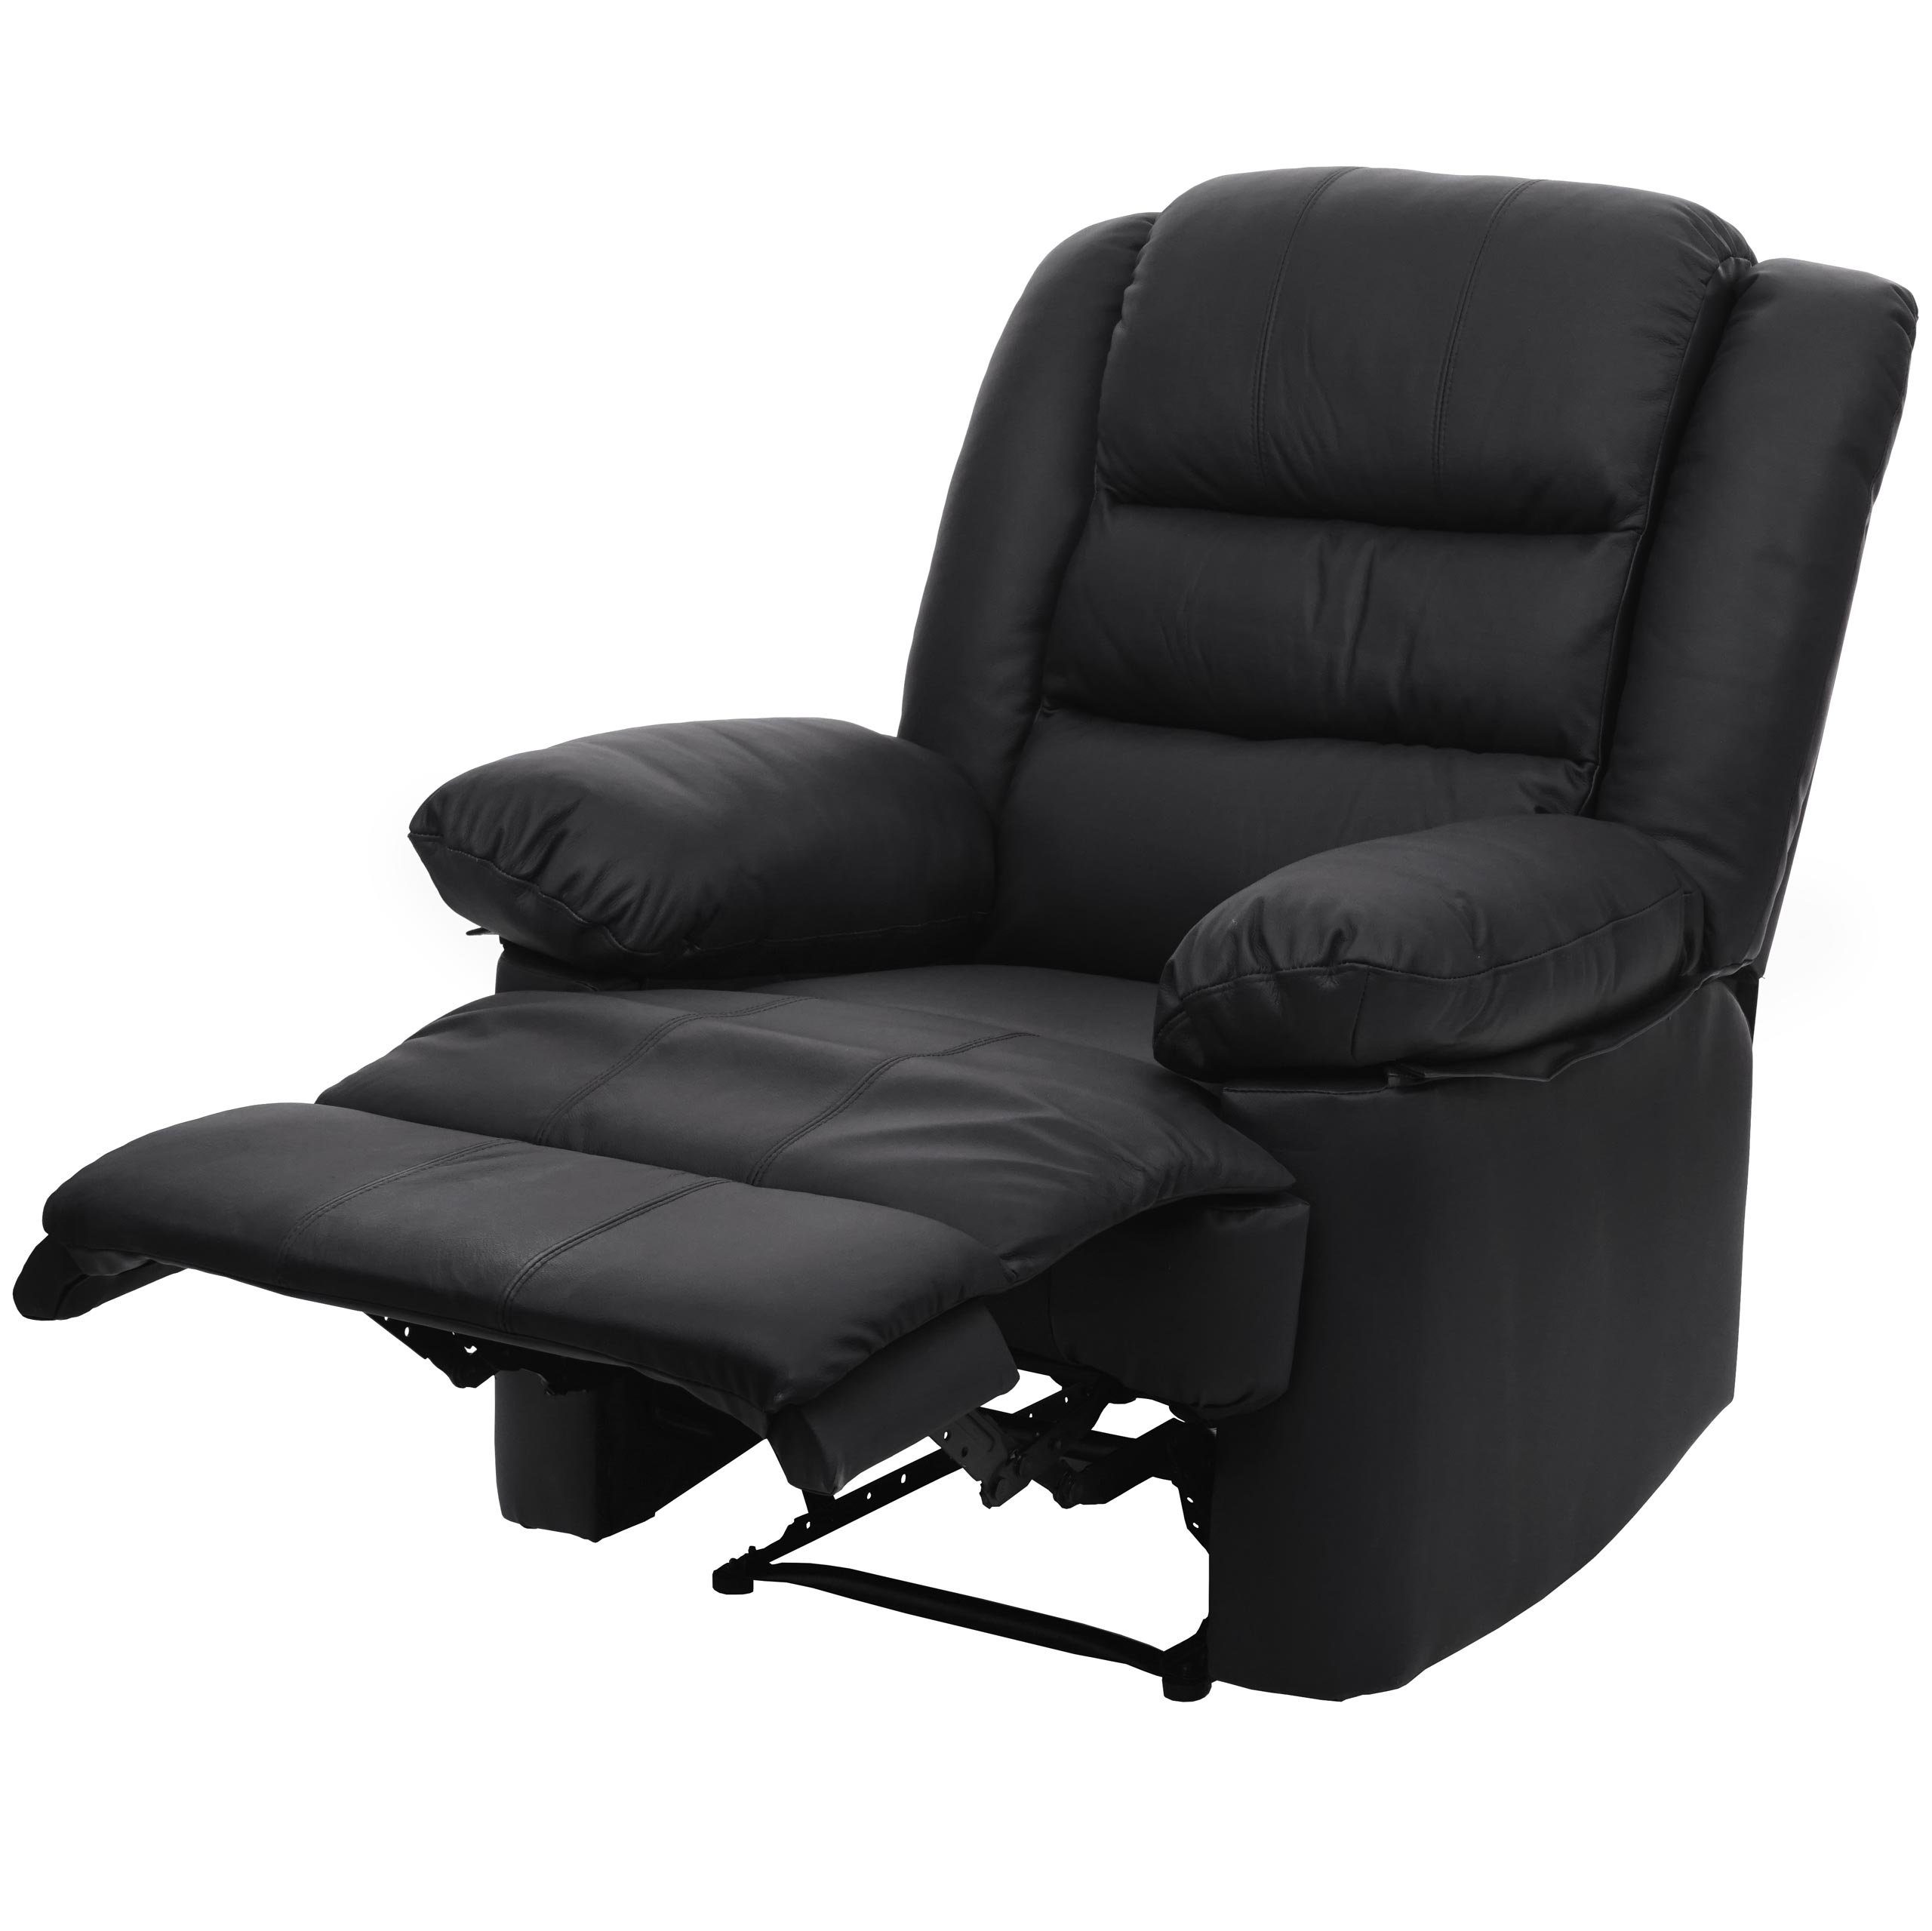 MCW TV-Sessel MCW-G15, Liegefläche: 165 cm, Verstellbare Rückenfläche, Fußstütze verstellbar, Liegefunktion schwarz